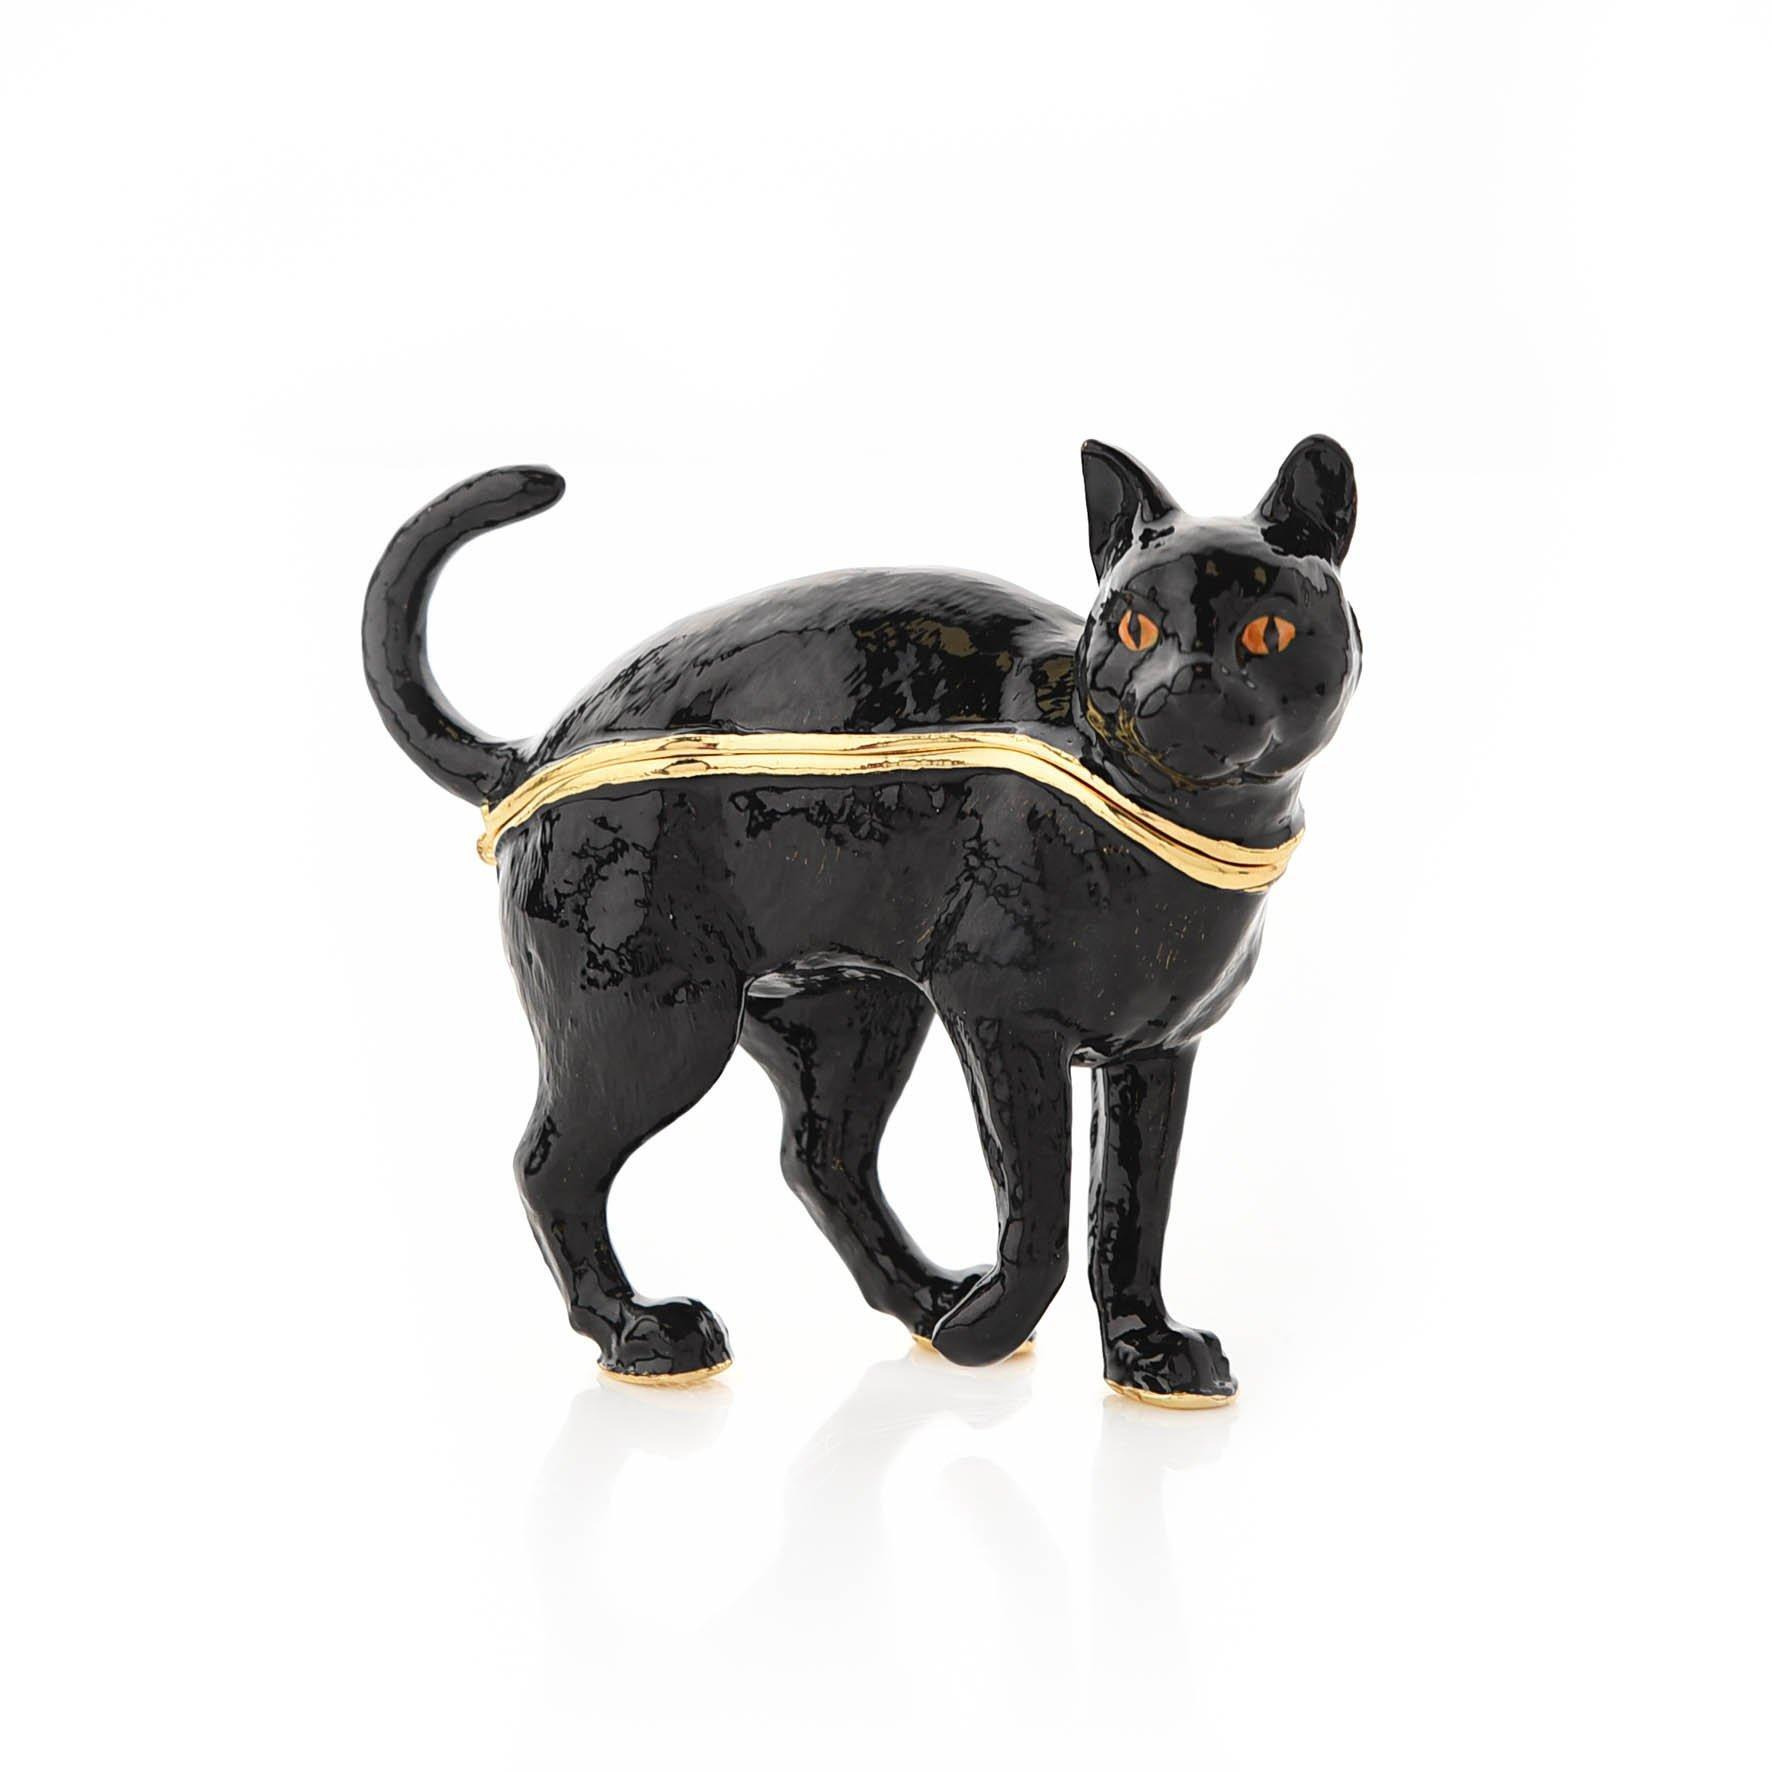 Hocus Pocus Halloween Treasured Trinkets - Black Cat - image 1